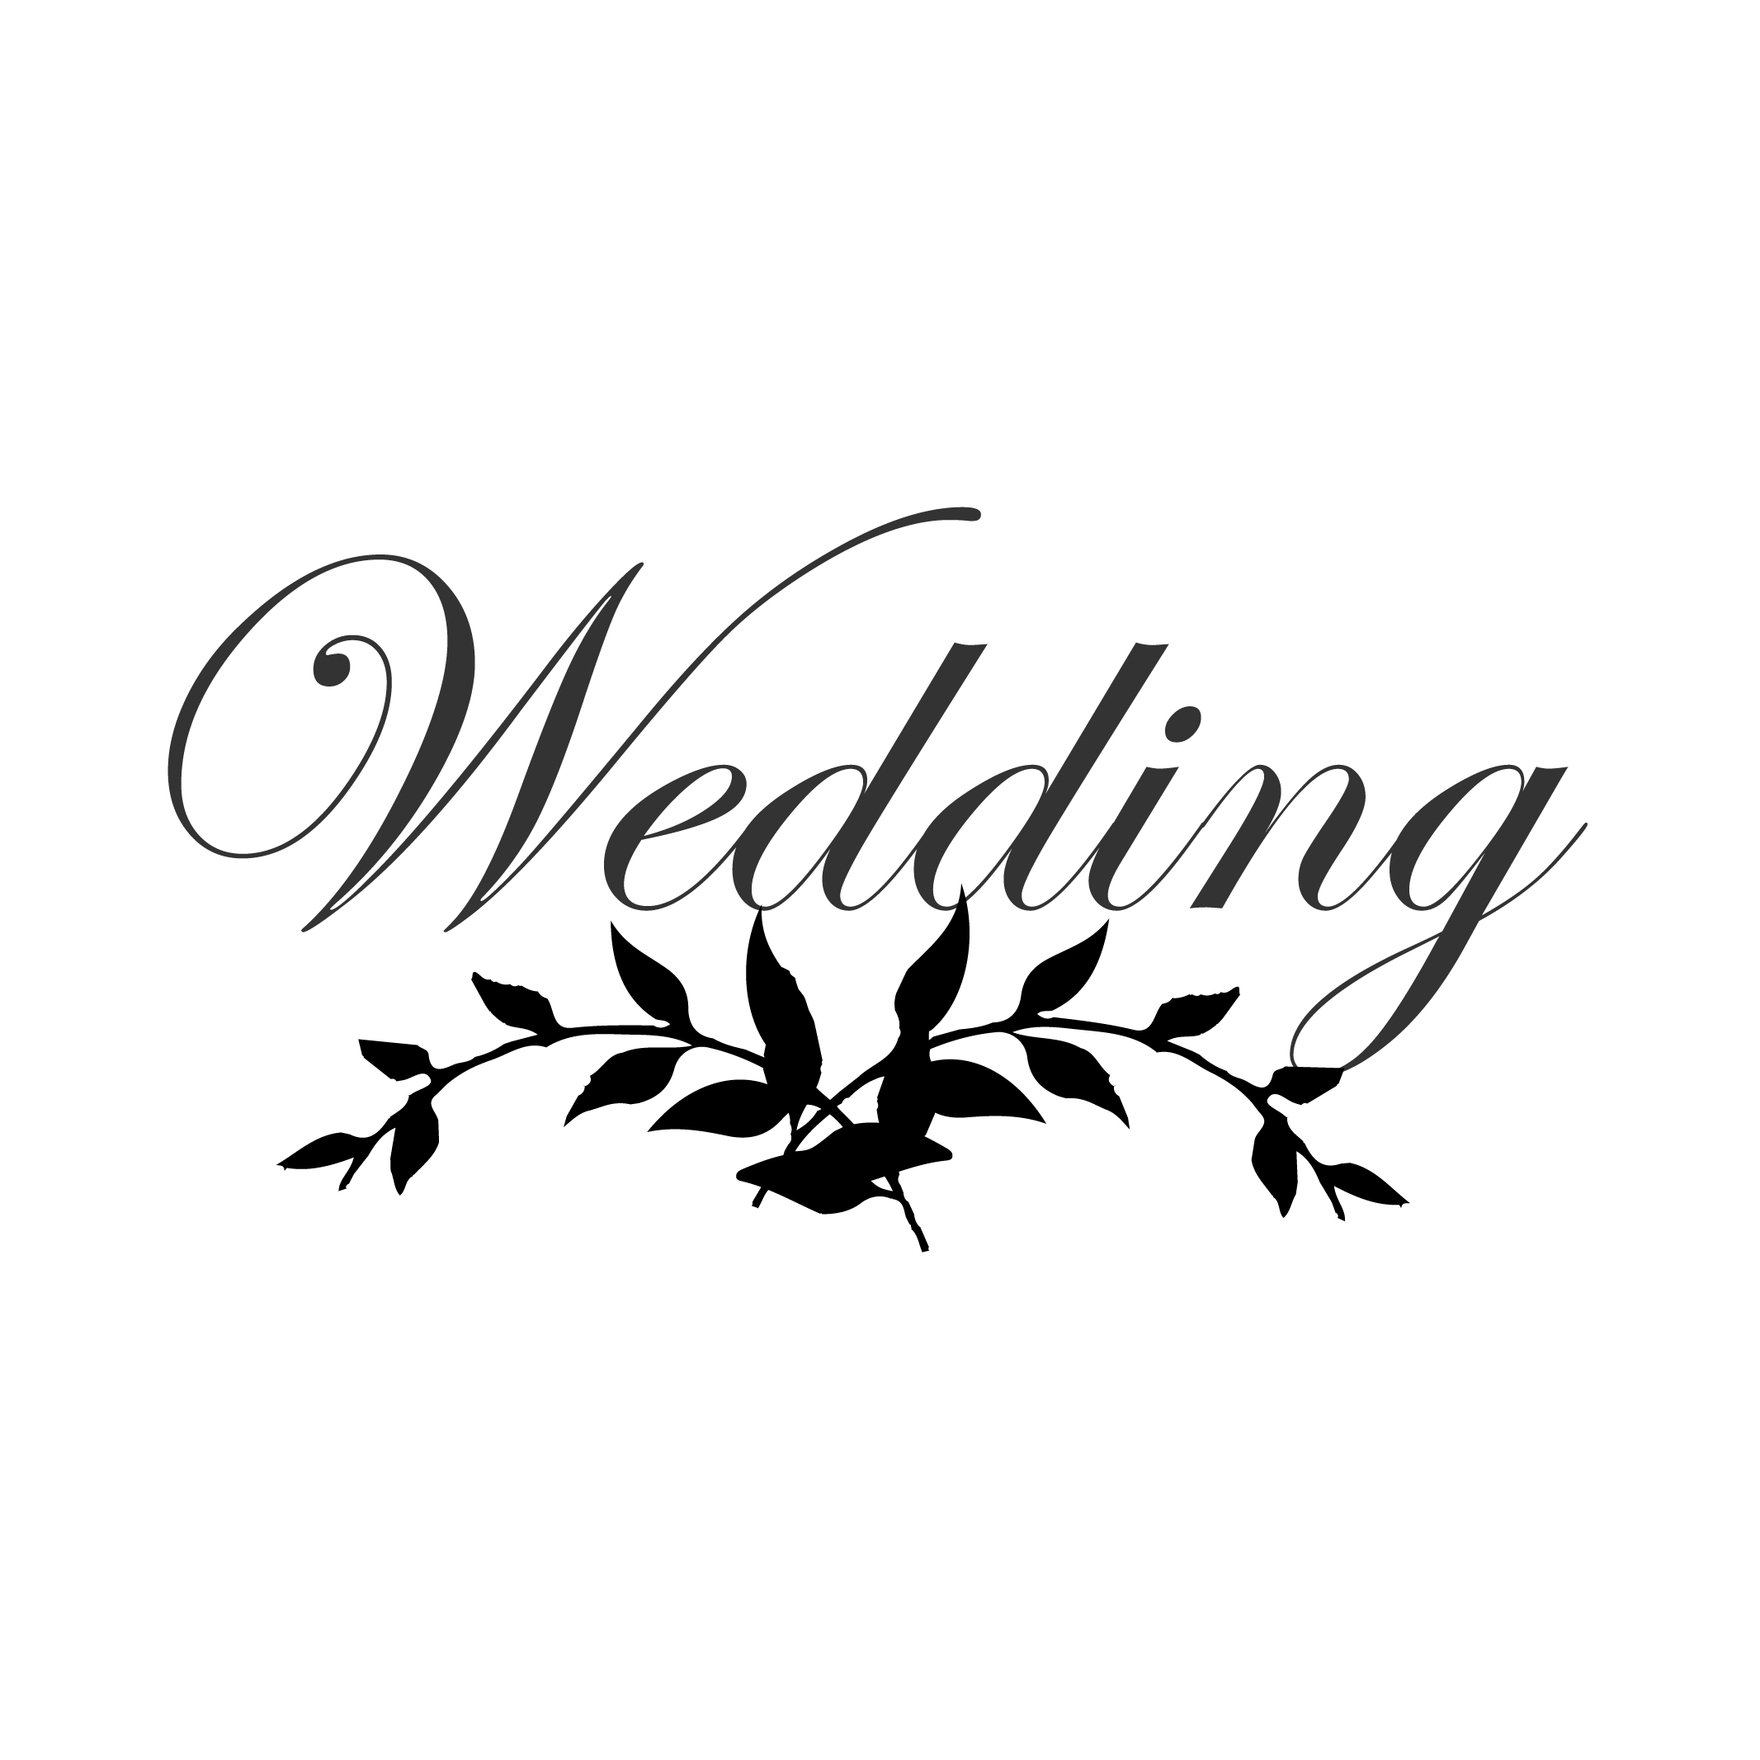 Free Wedding Title Silhouette